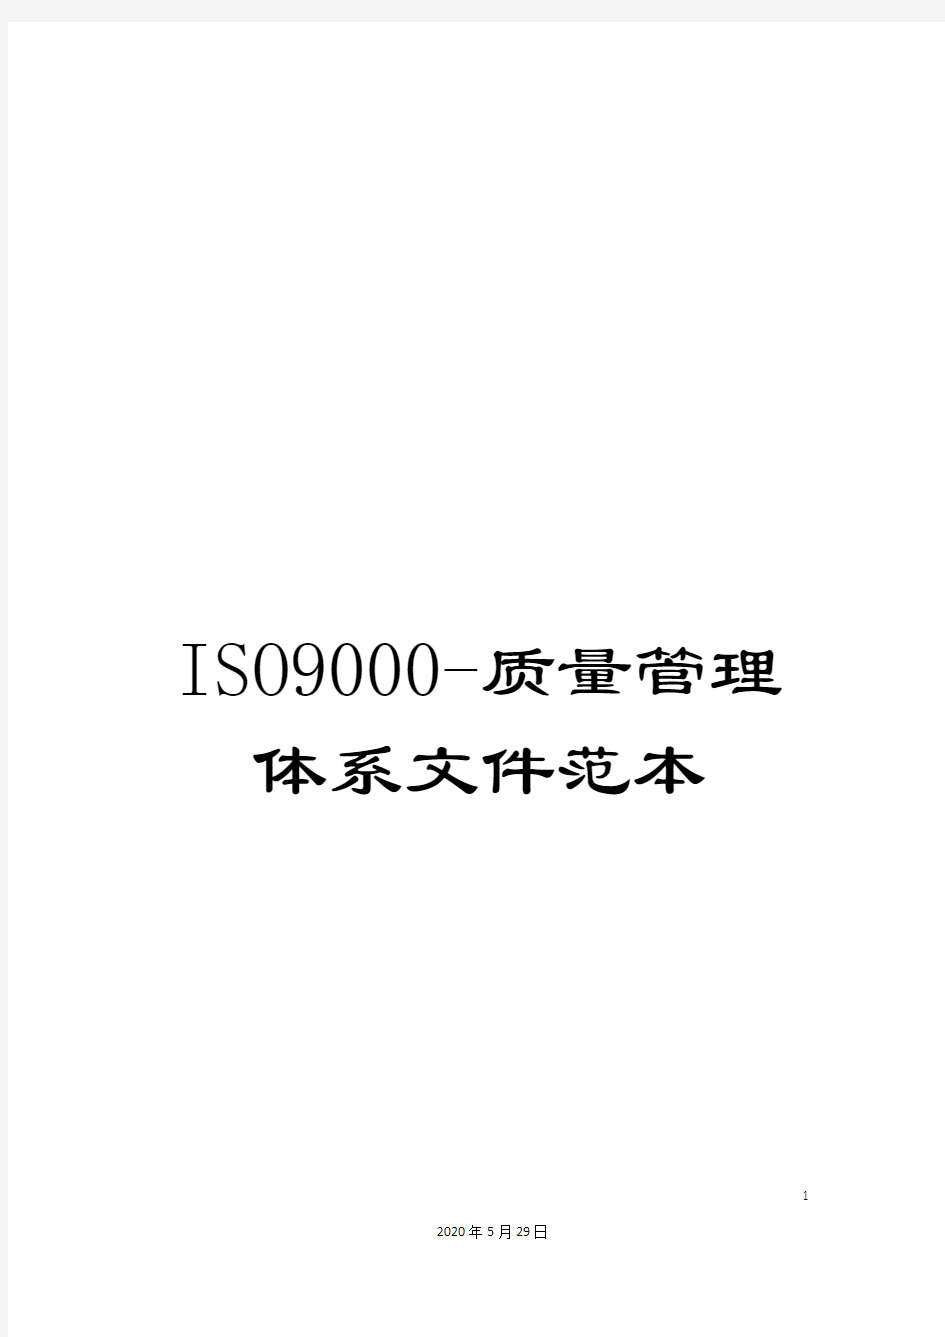 ISO9000-质量管理体系文件范本